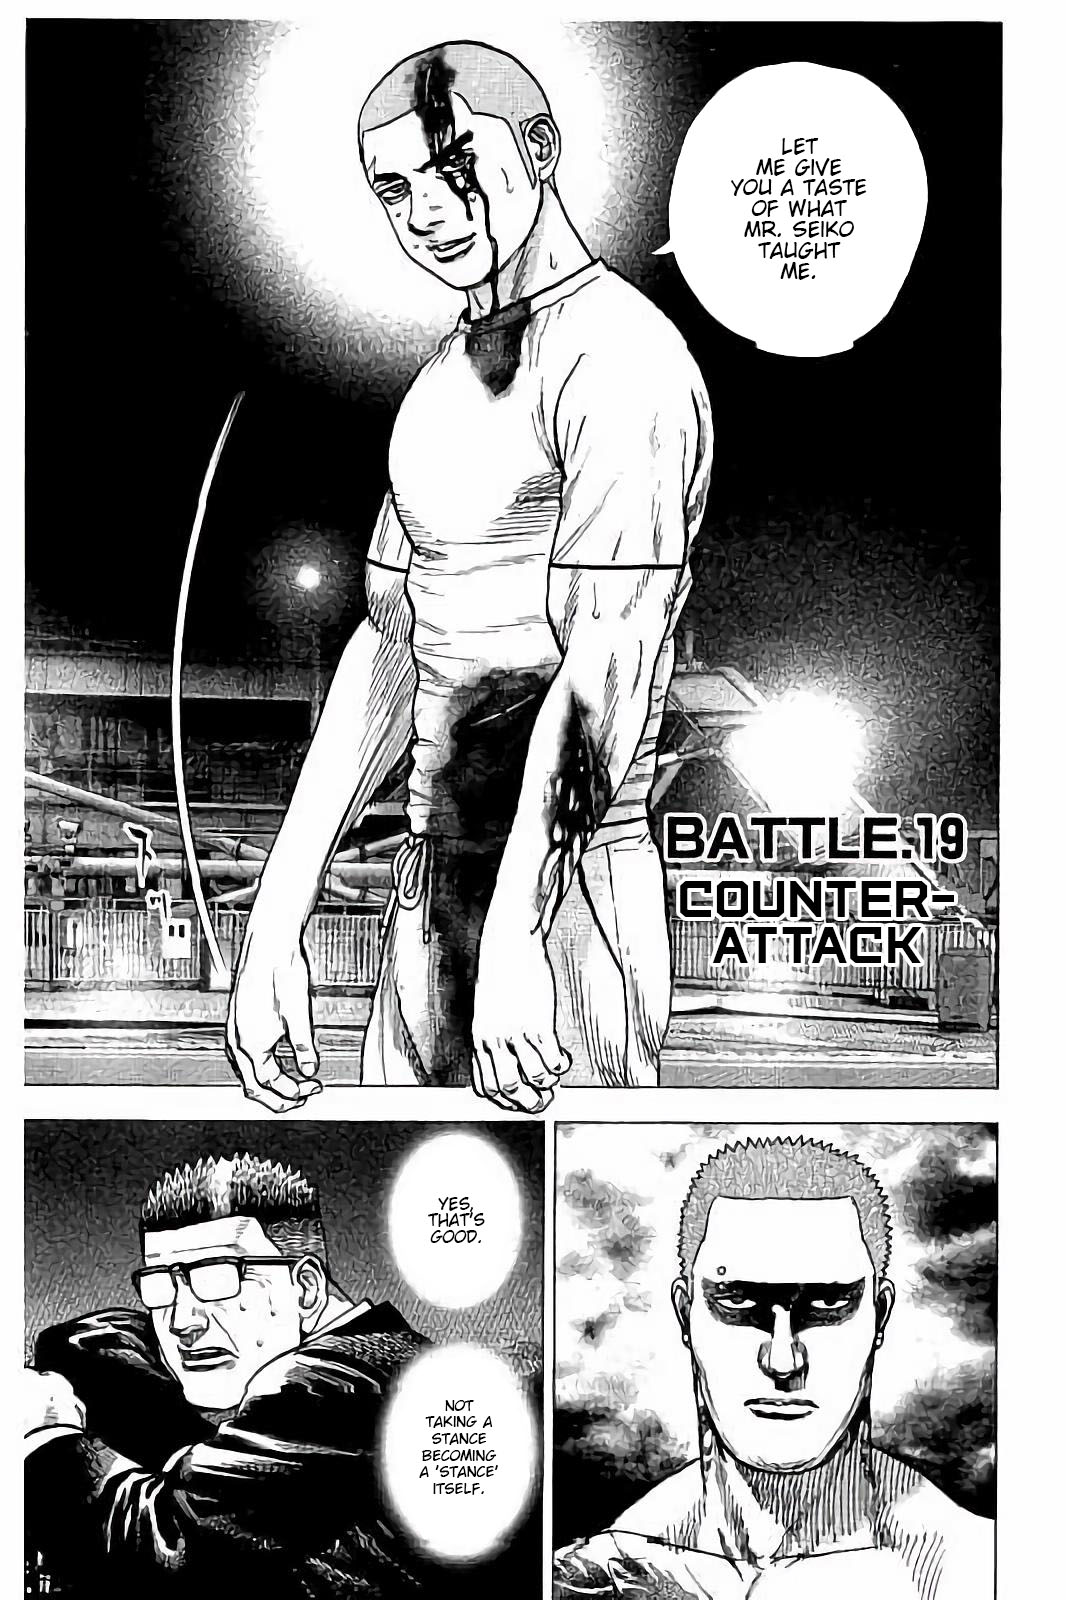 Tough Gaiden - Ryuu Wo Tsugu Otoko Vol.2 Chapter 19: Counterattack - Picture 1